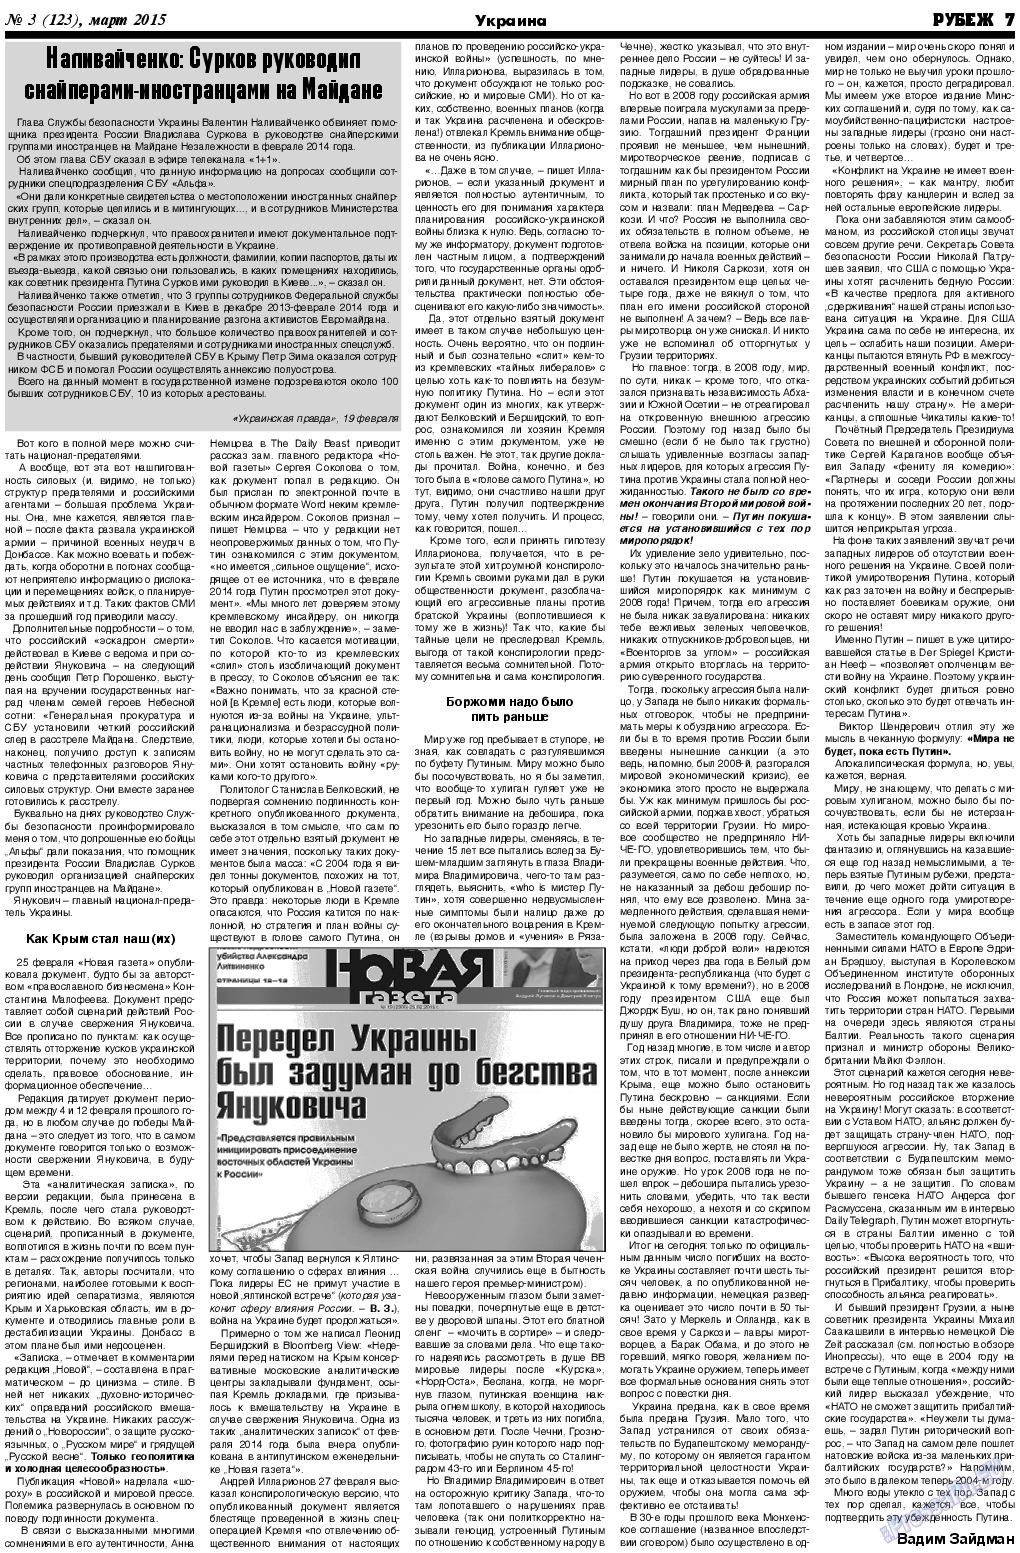 Рубеж, газета. 2015 №3 стр.7